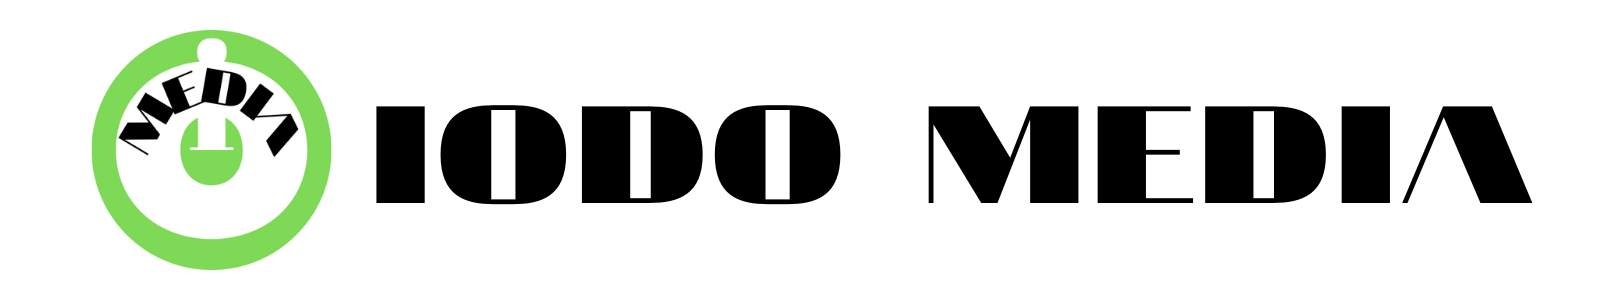 iodo-不動産-法律金融サービスガイド